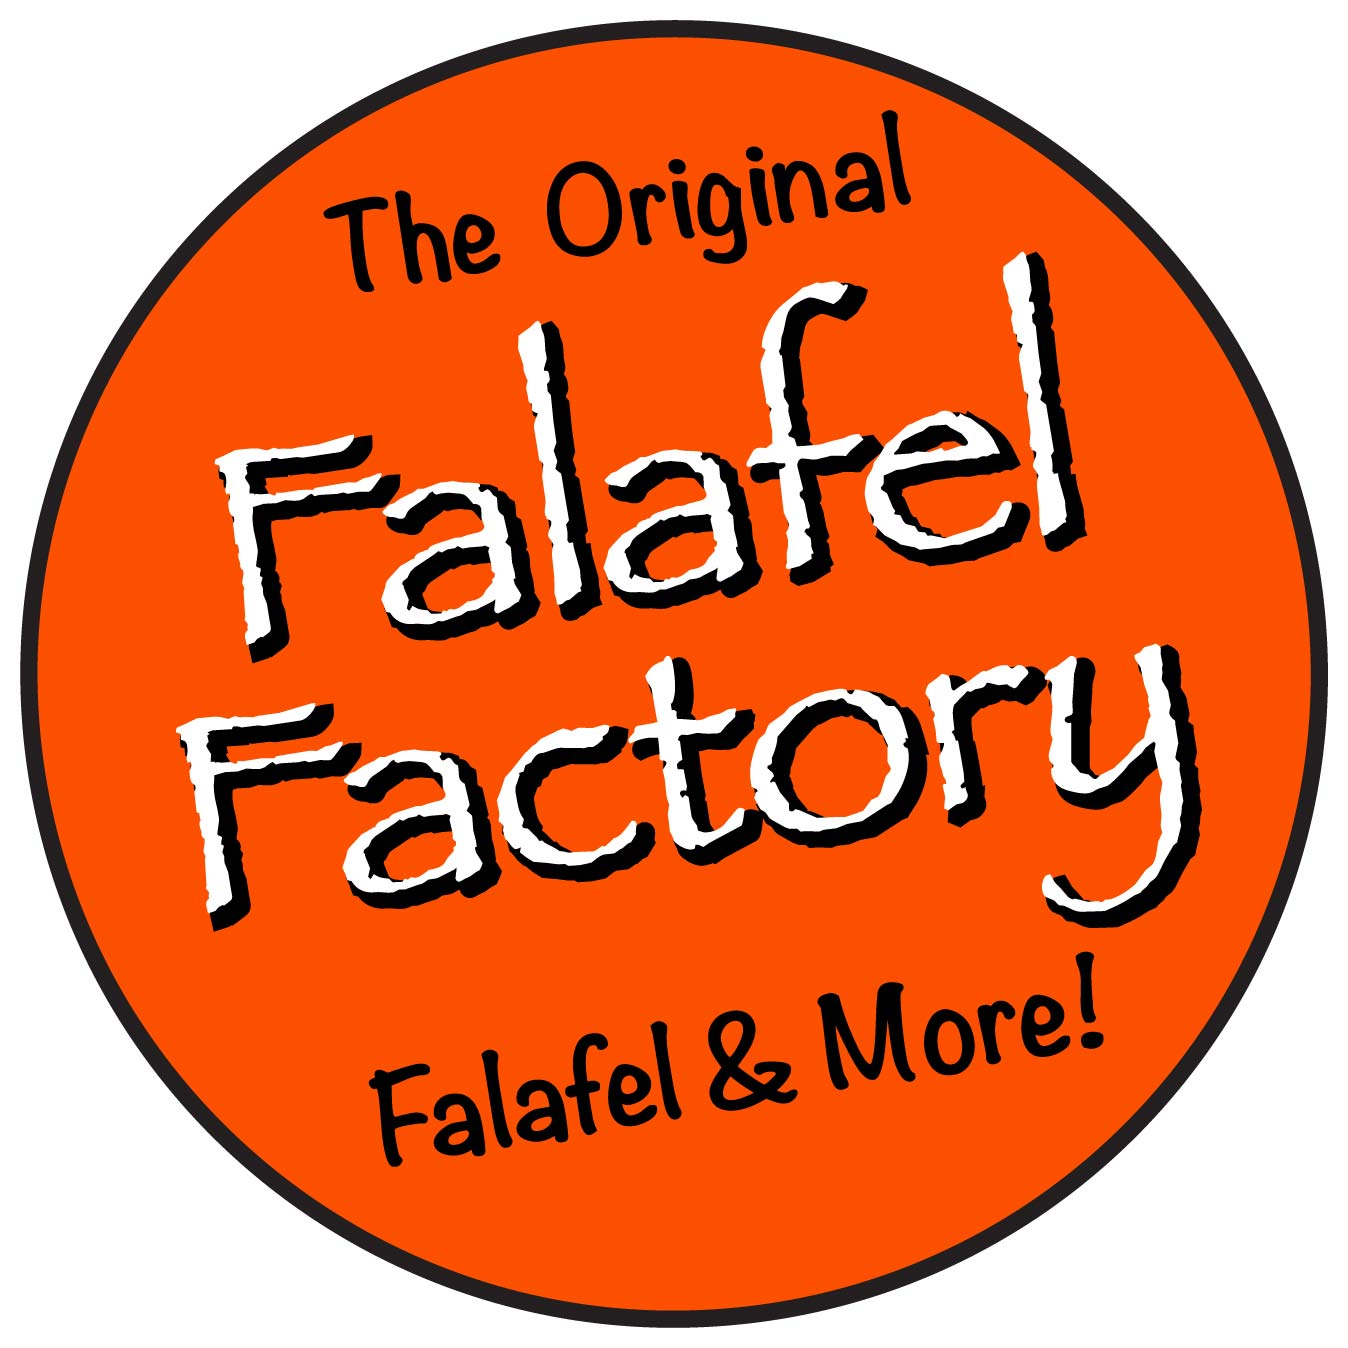 The Original Falafel Factory